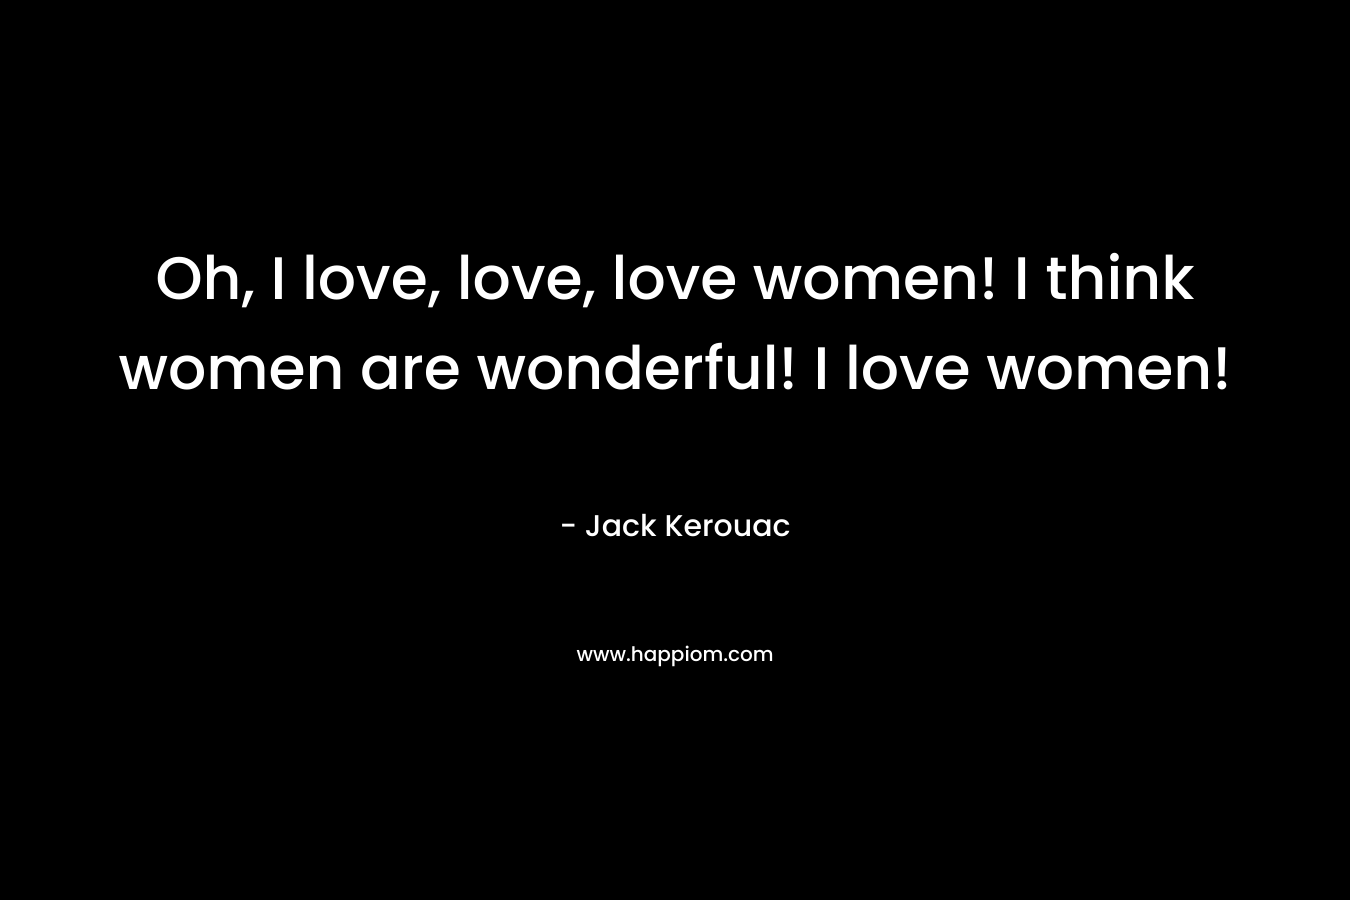 Oh, I love, love, love women! I think women are wonderful! I love women!